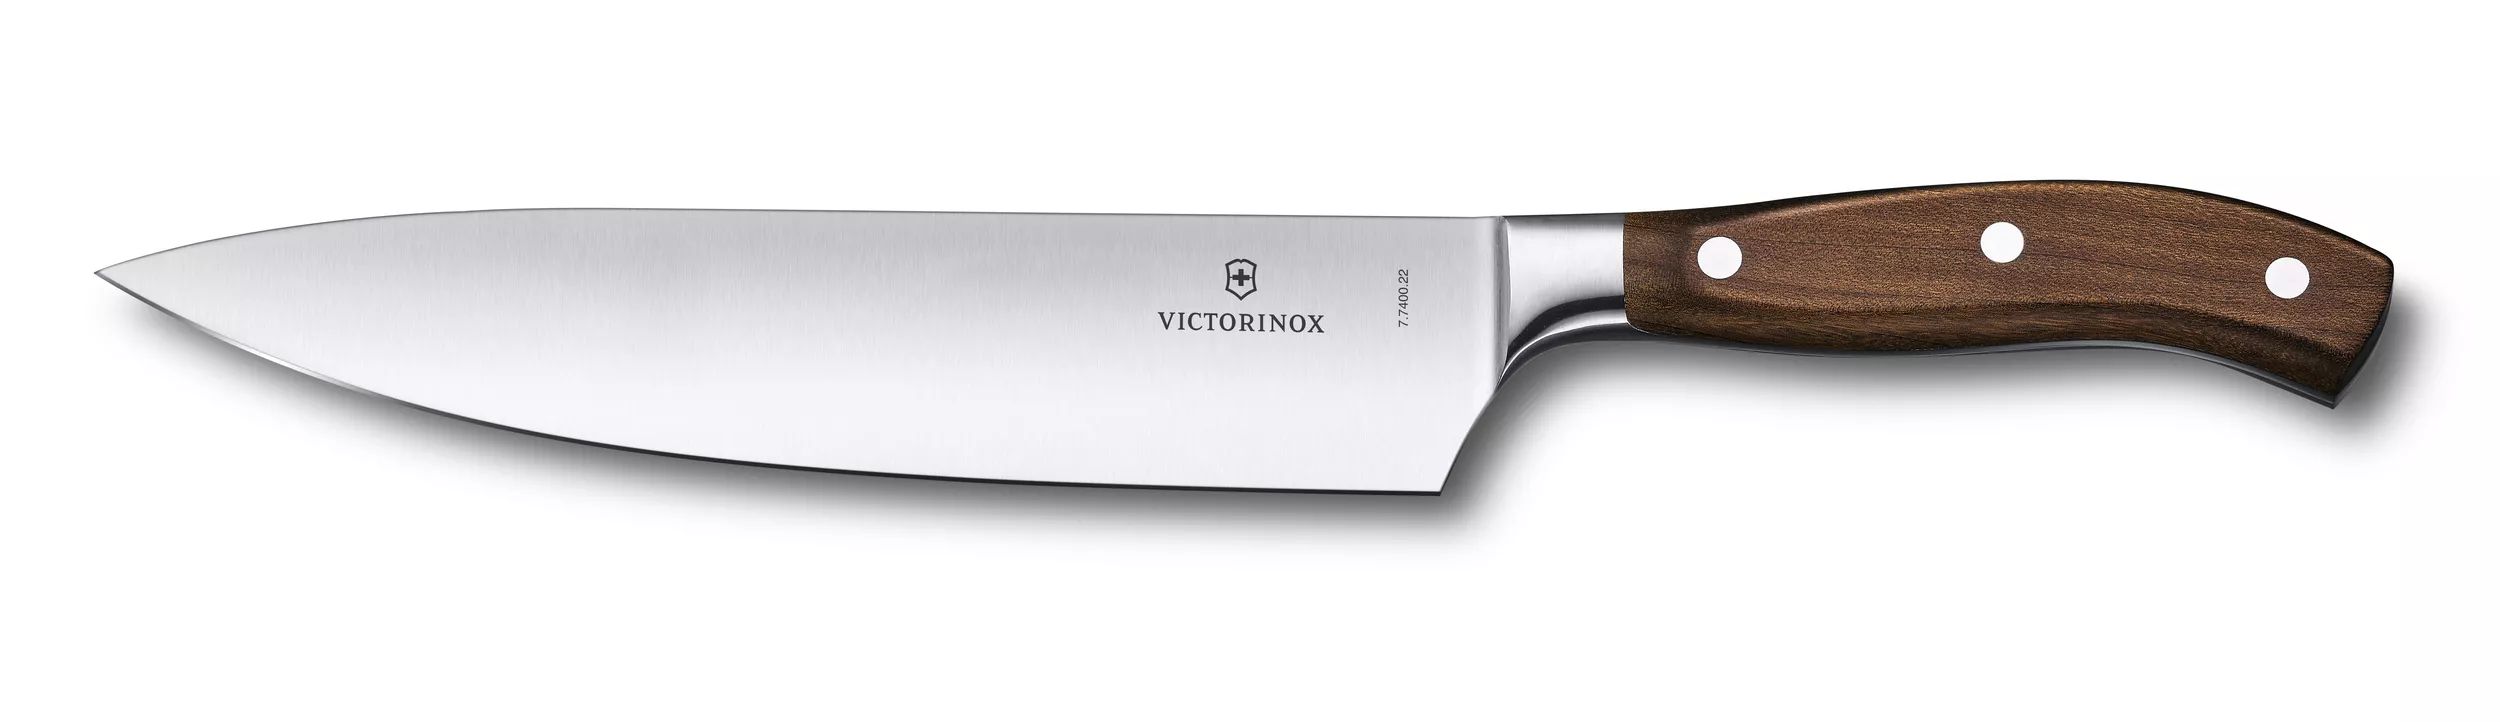 VICTORINOX Cuchillo para chef forjado Grand Maître color Negro. Hoja 20 cm.  Victorinox